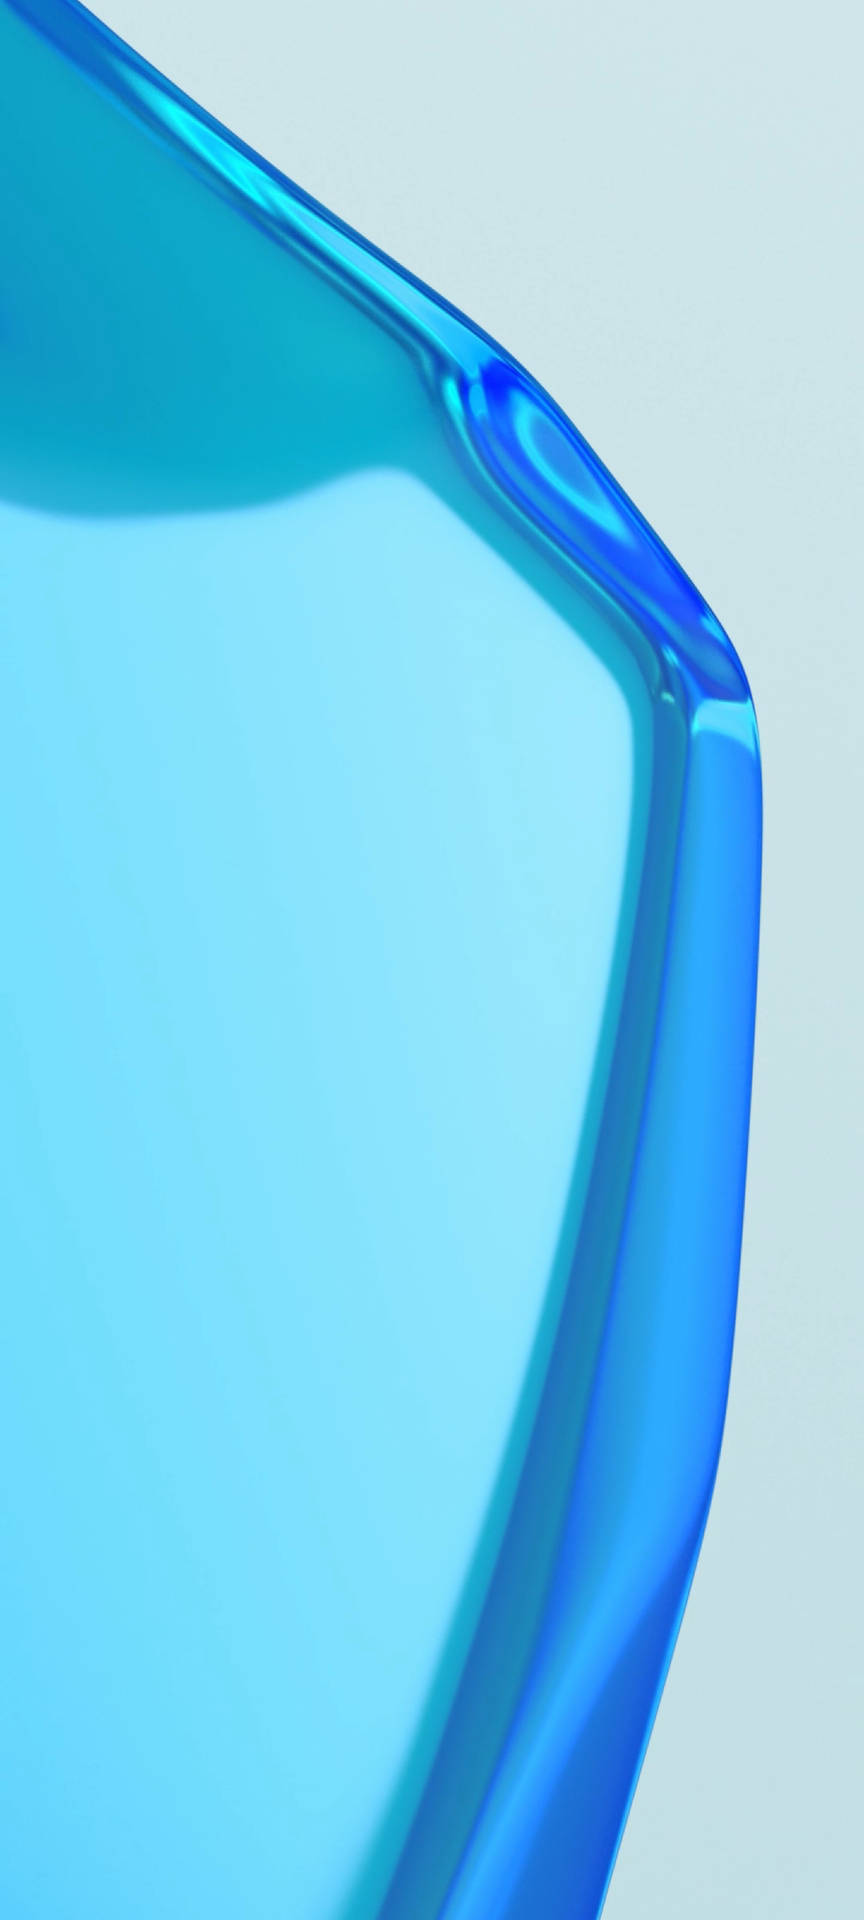 Translucent Blue Glass Oneplus 9r Wallpaper